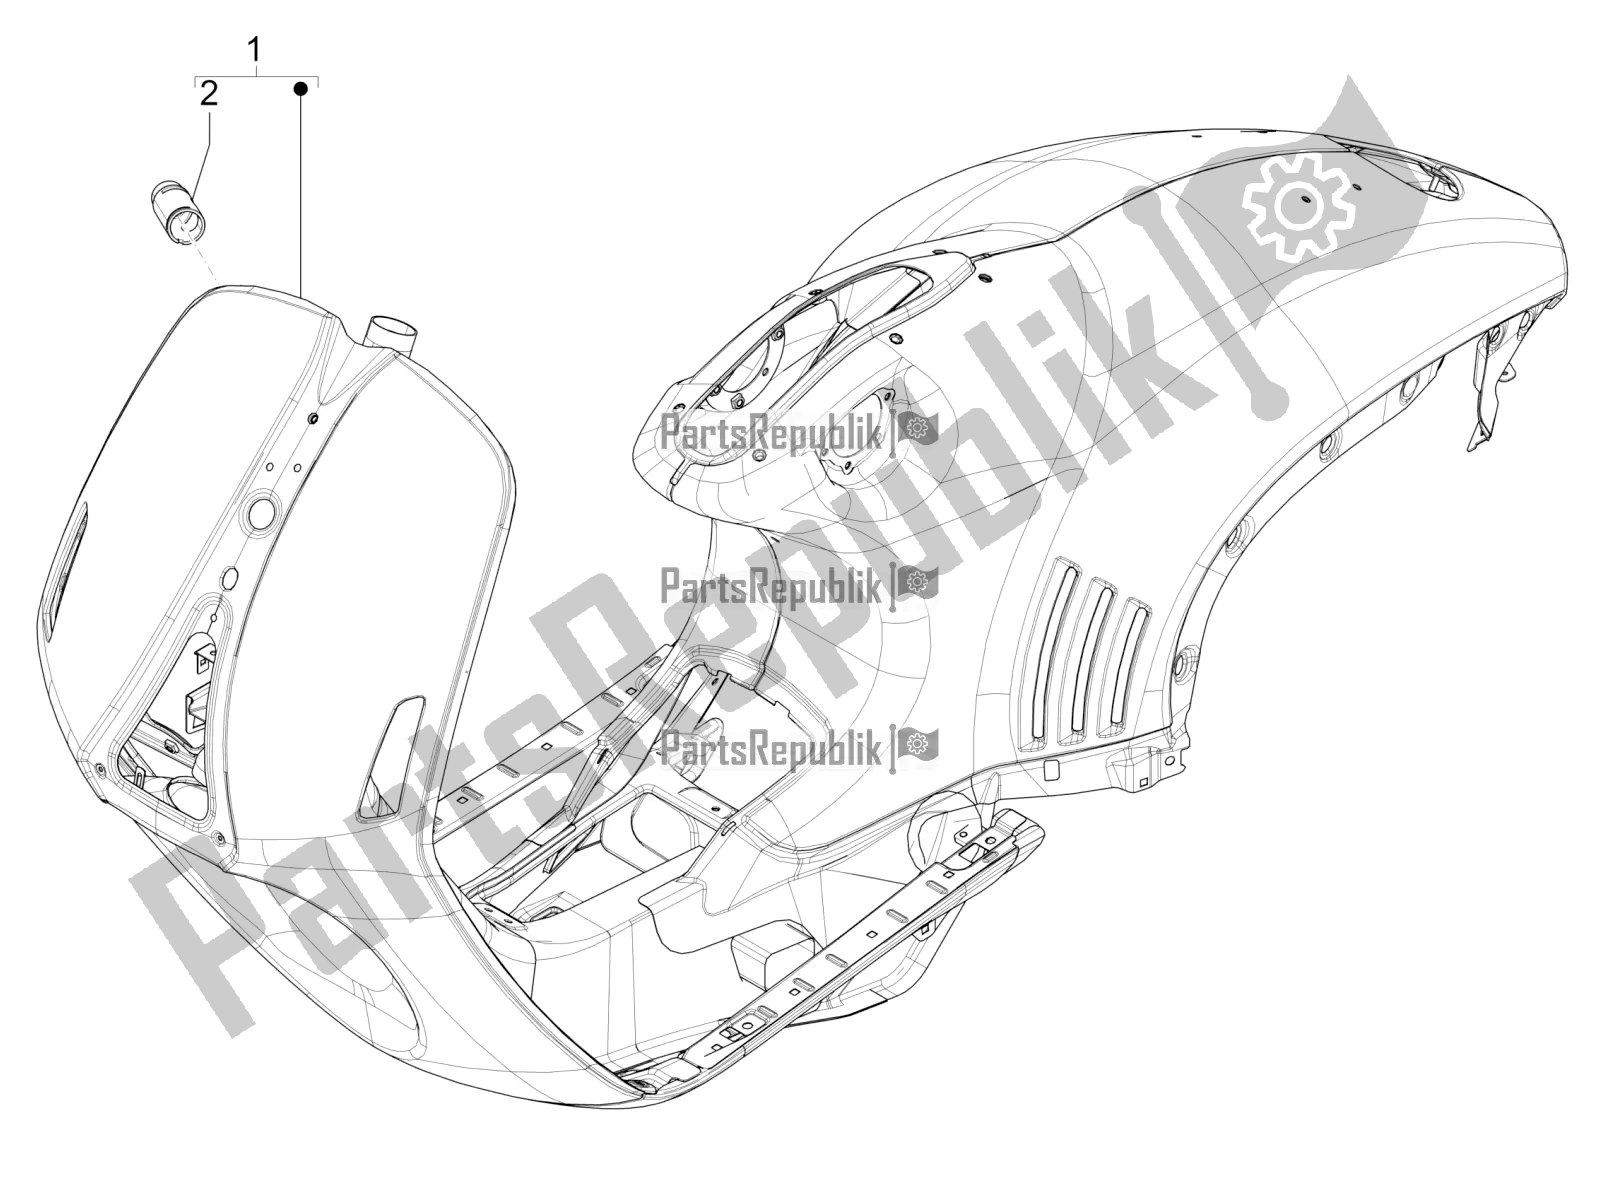 All parts for the Frame/bodywork of the Vespa 946 150 4 STR / Red 2020